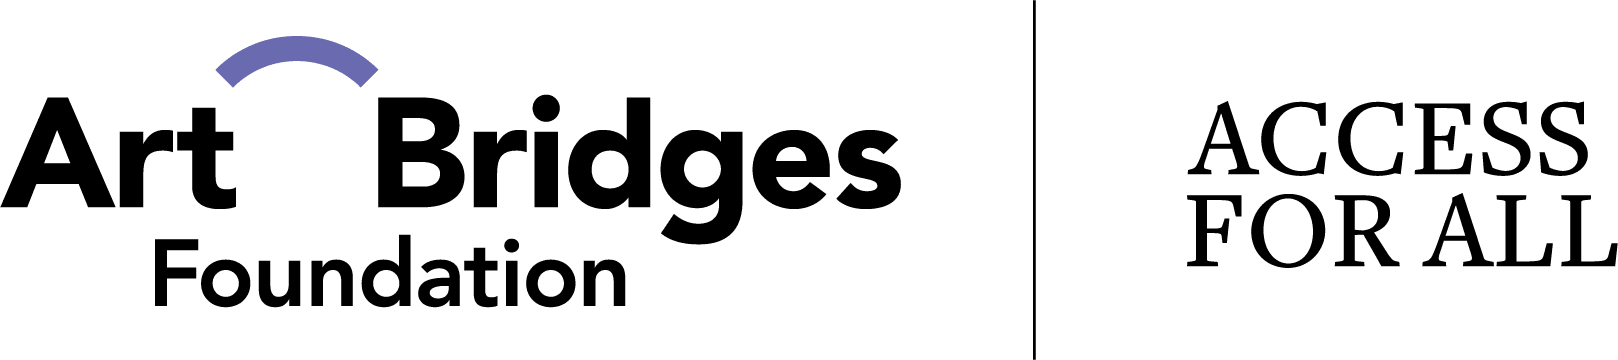 Art Bridges Access for All Logo